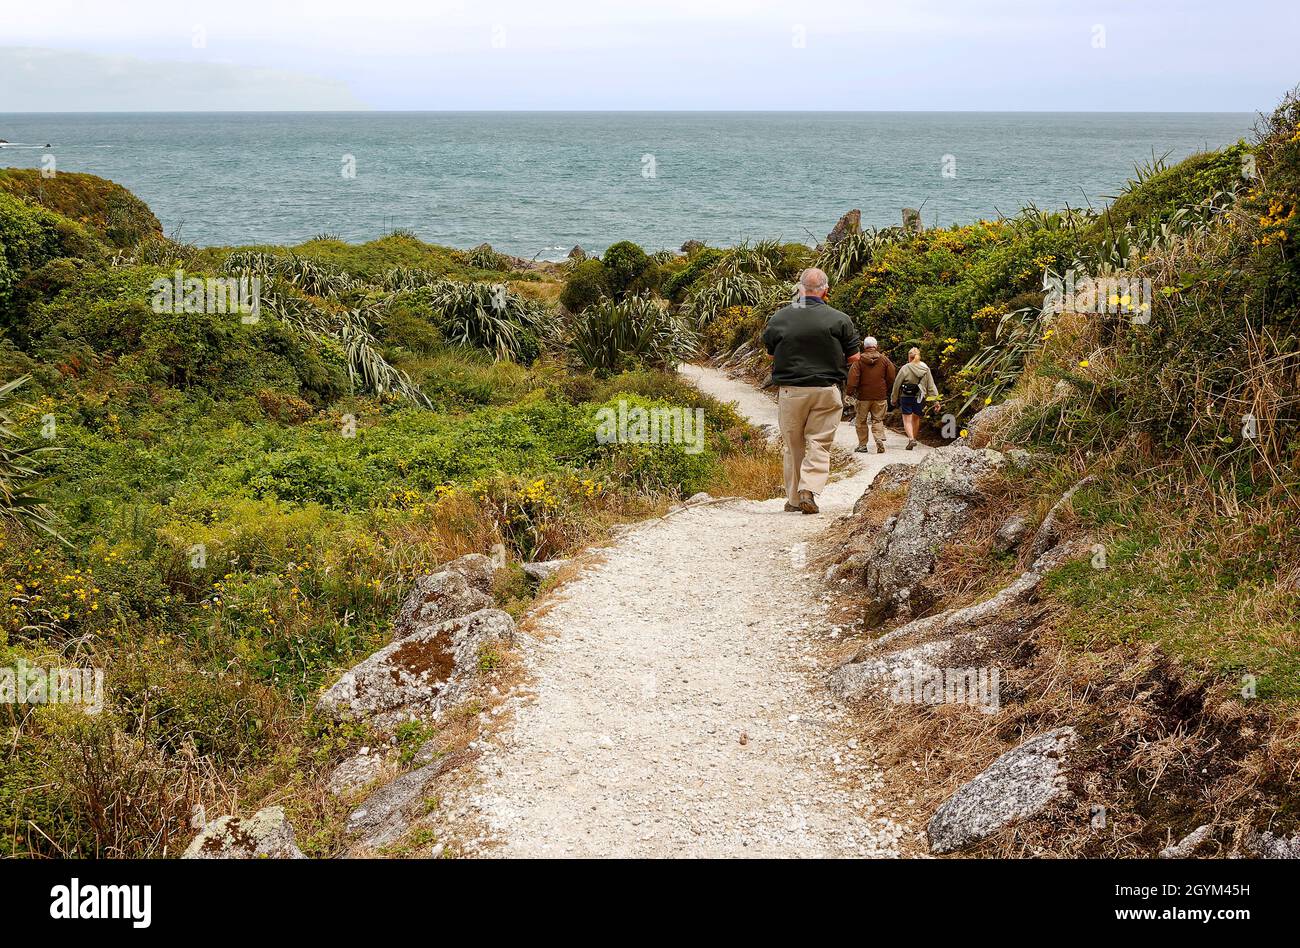 Cape Foulwind Walkway, Tauranga Bay; 3 persone a piedi, sentiero di ghiaia stretta, vegetazione verde, South Island, West Coast, Nuova Zelanda, MR Foto Stock